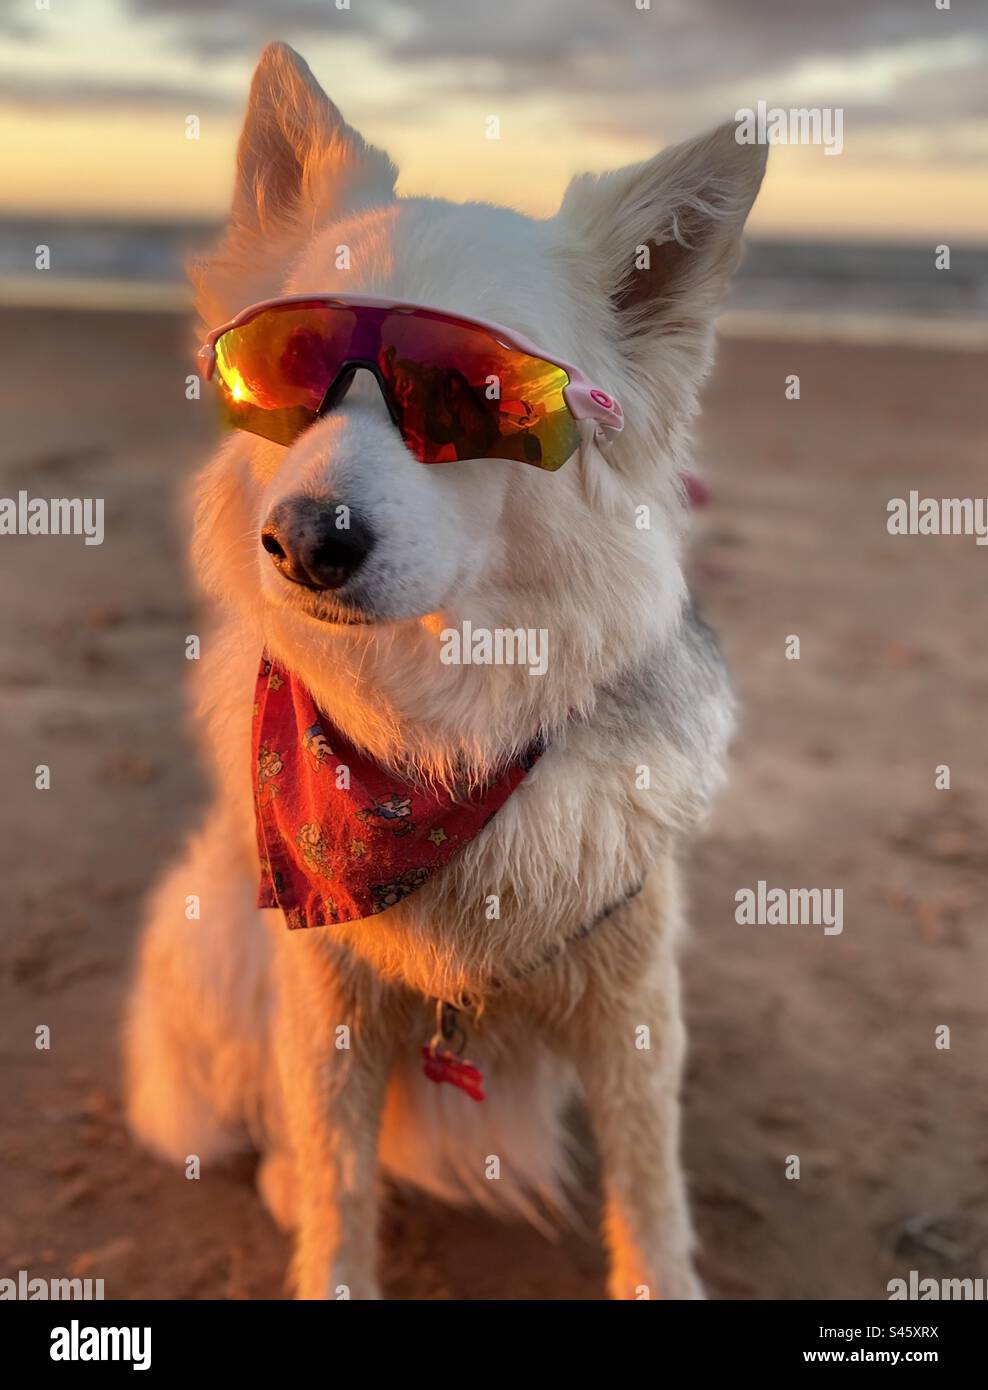 dog in sunglasses Stock Photo